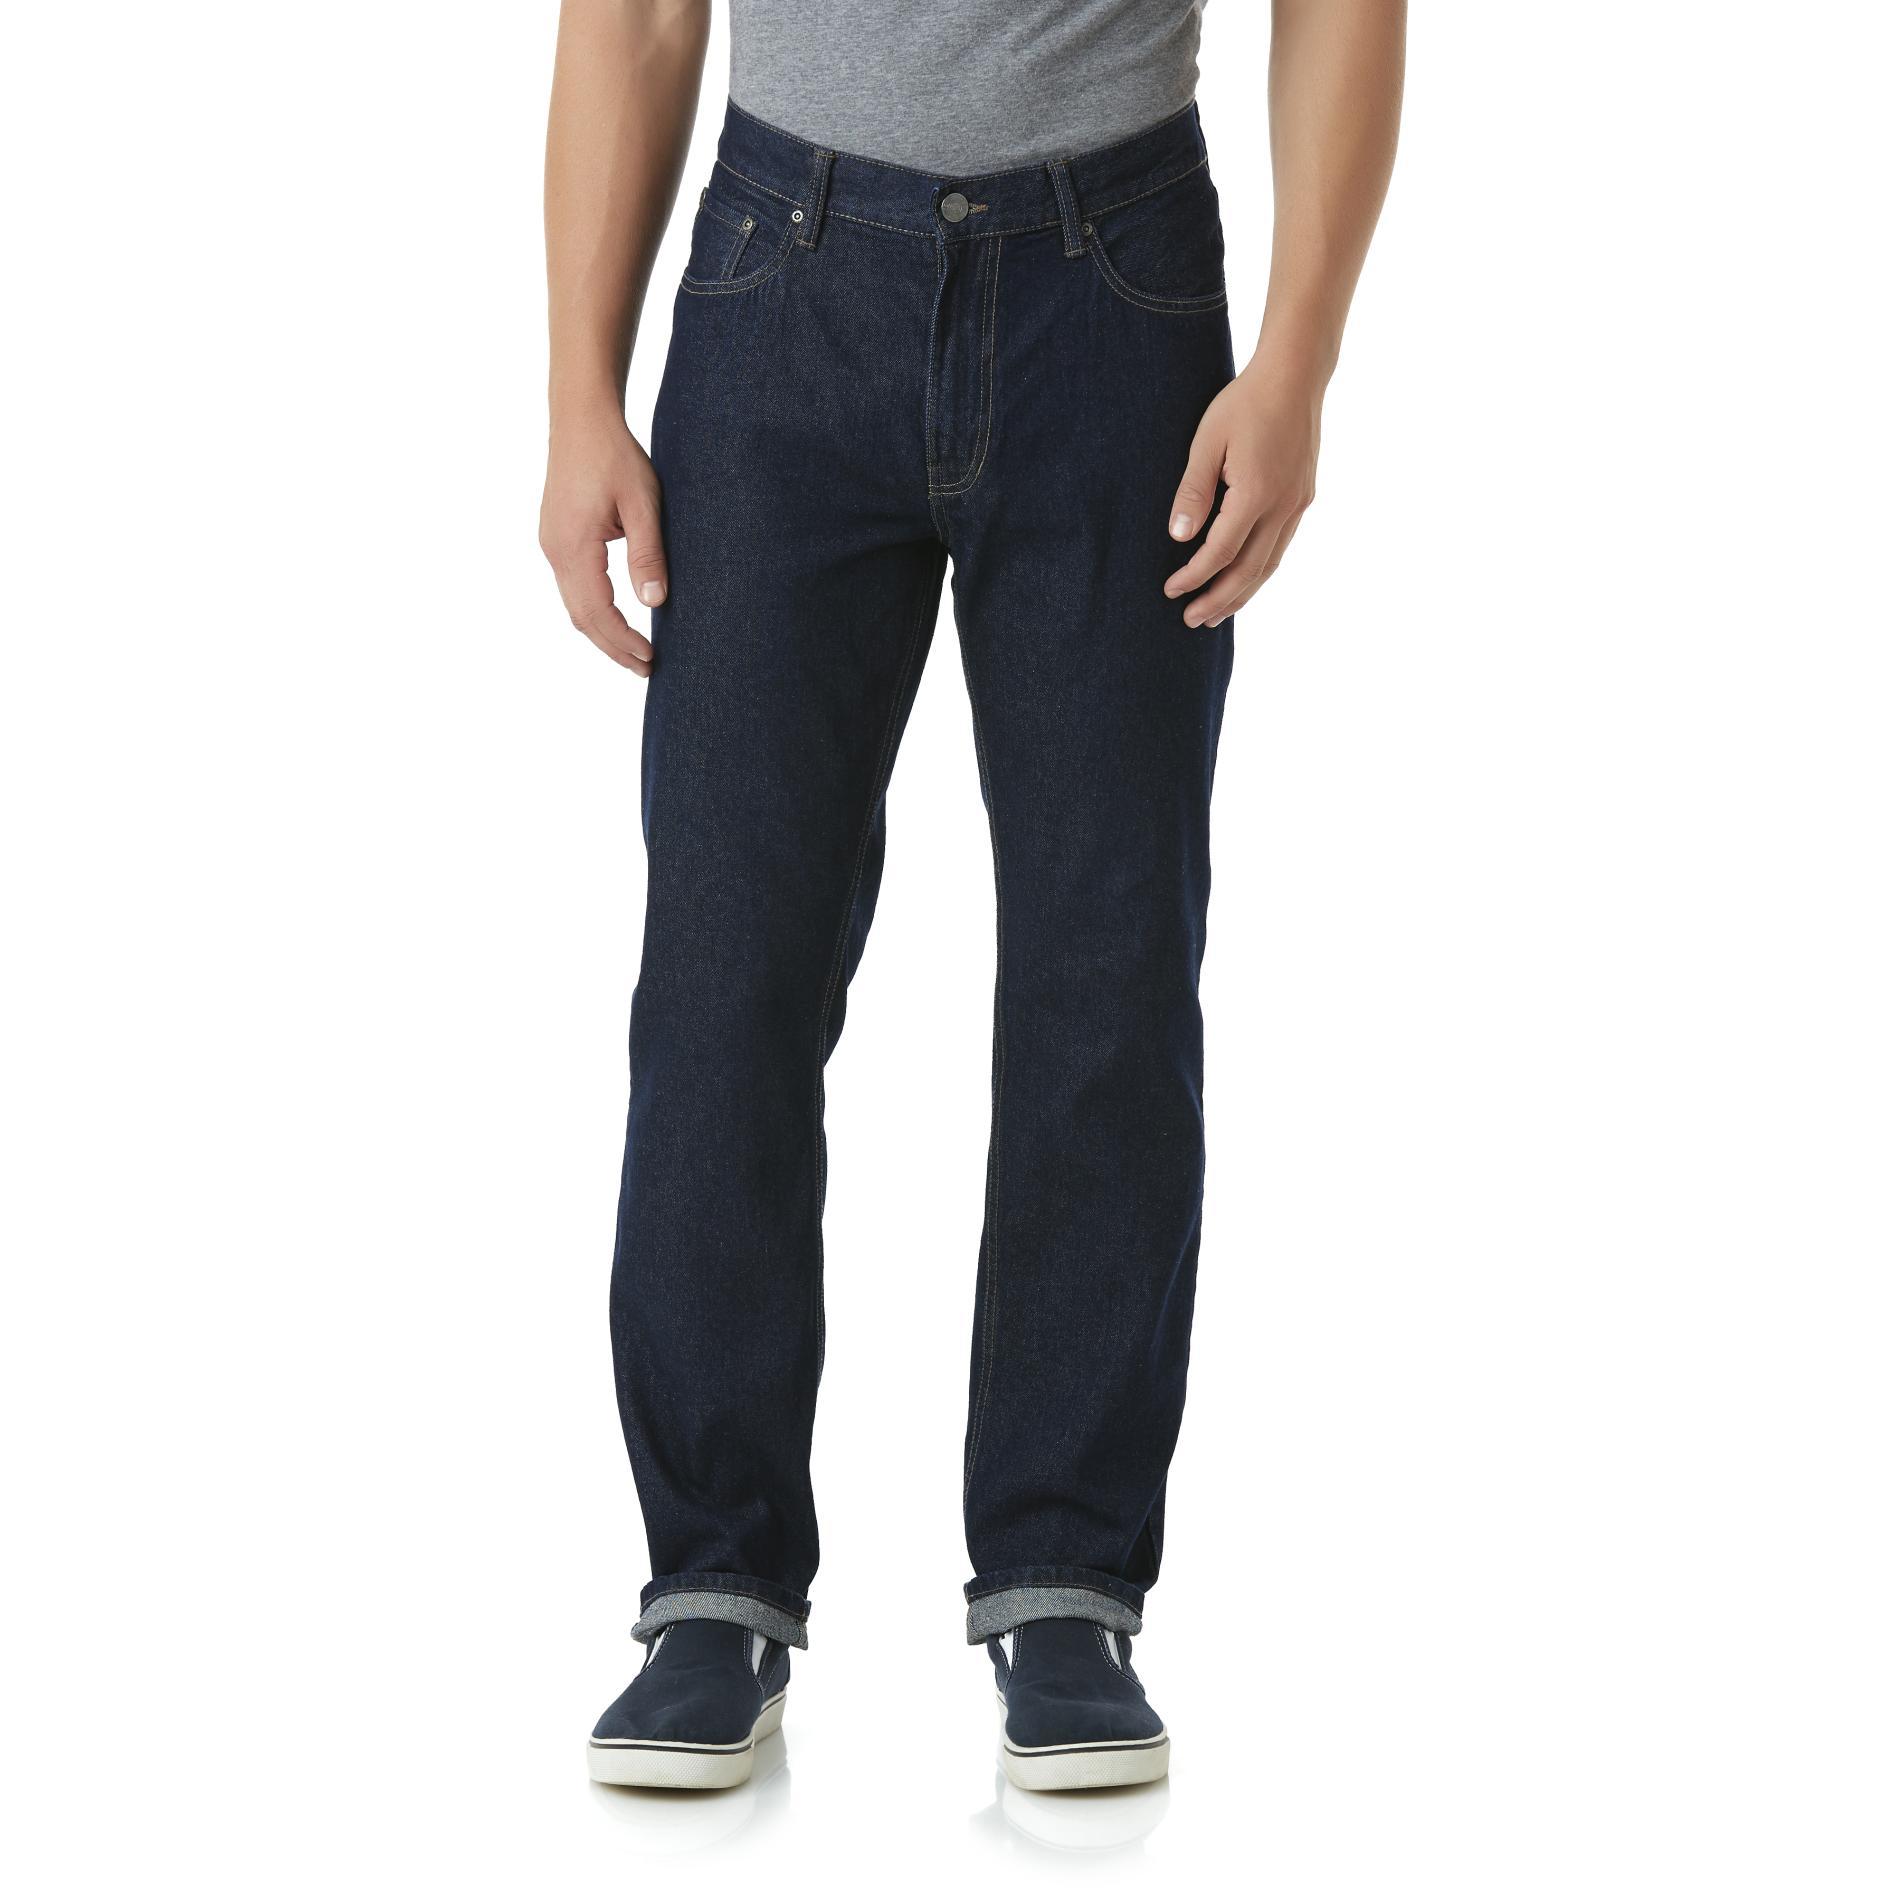 Basic Editions Men's Slim Fit Jeans - Dark Wash